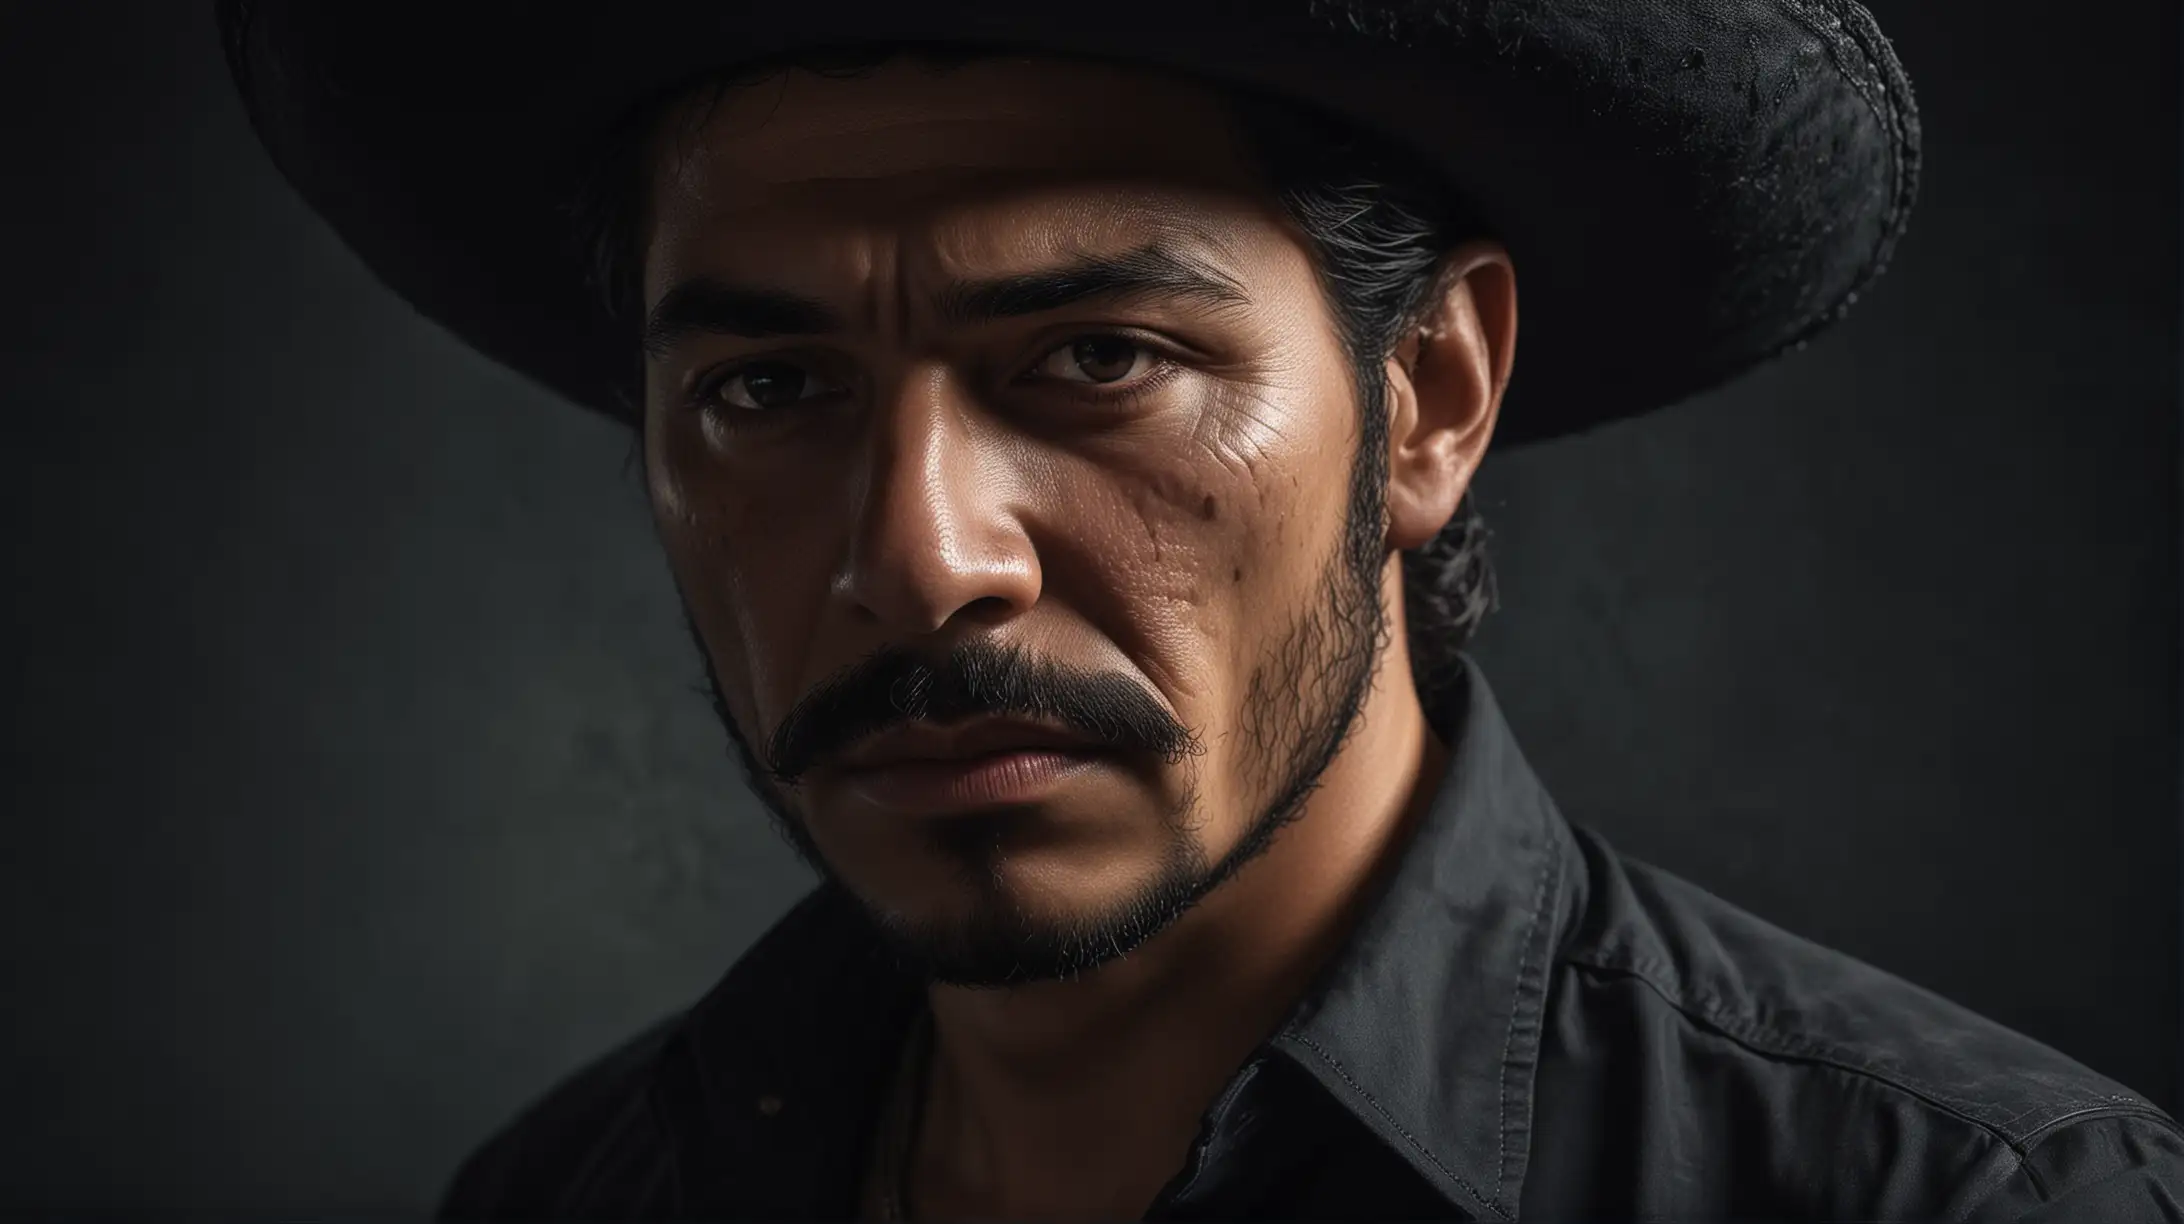 Intimidating Mexican Drug Cartel Member in Cinematic Portrait